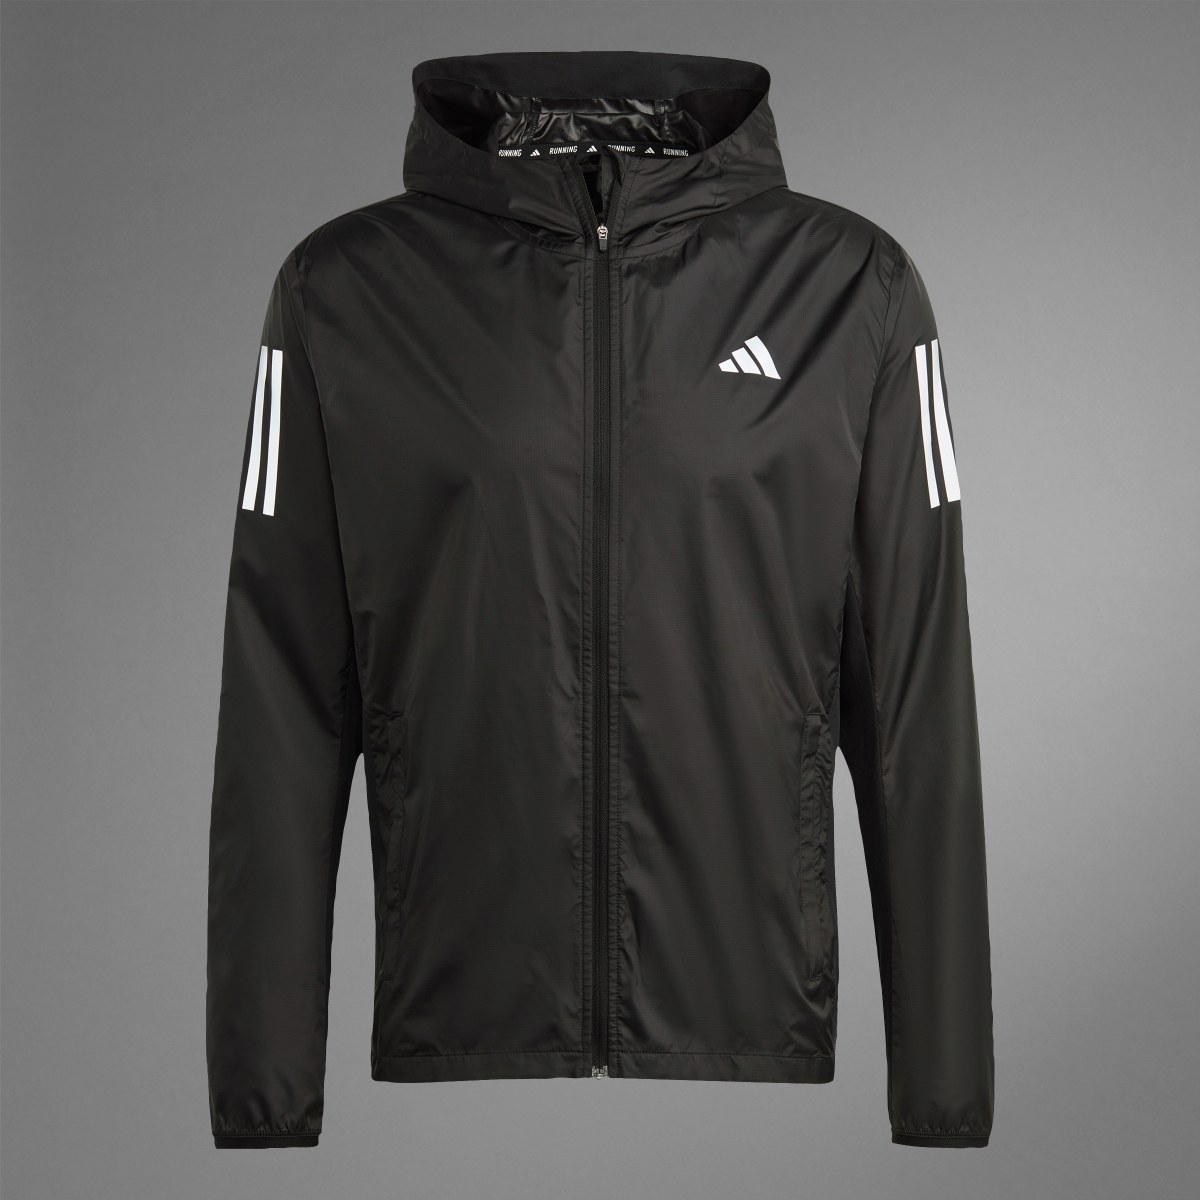 Adidas Own the Run Jacket. 11